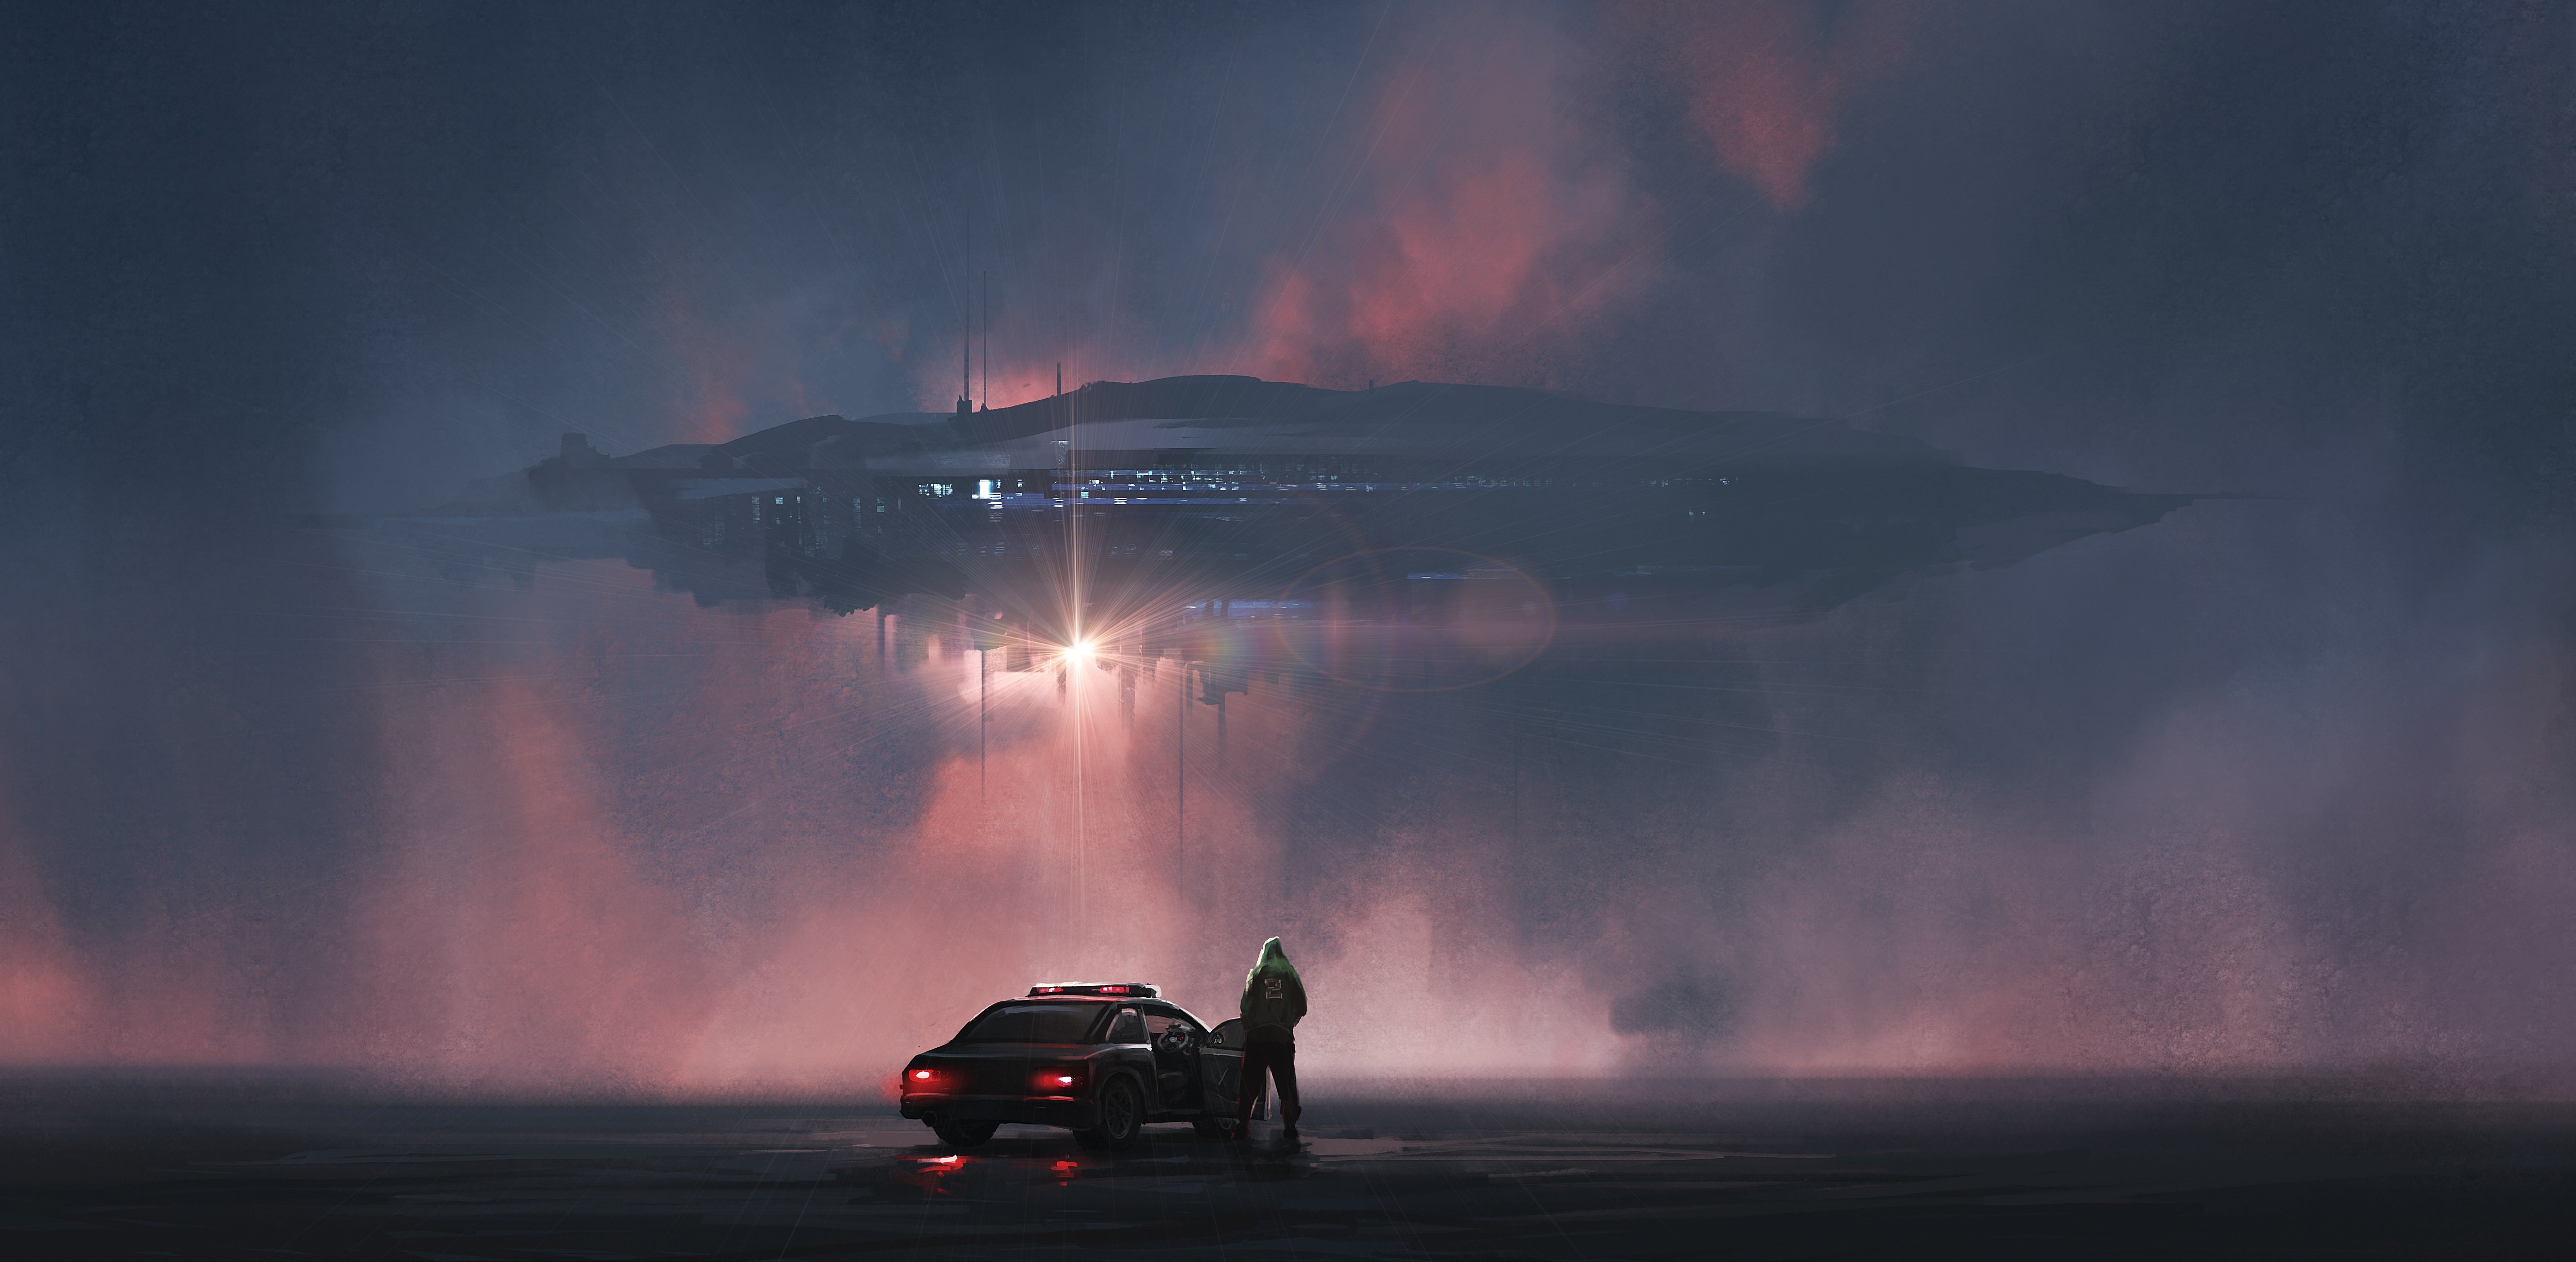 Science Fiction Spaceship Digital Art Artwork Futuristic Car Men Police Cars Lights Mist Clouds 5000x2450